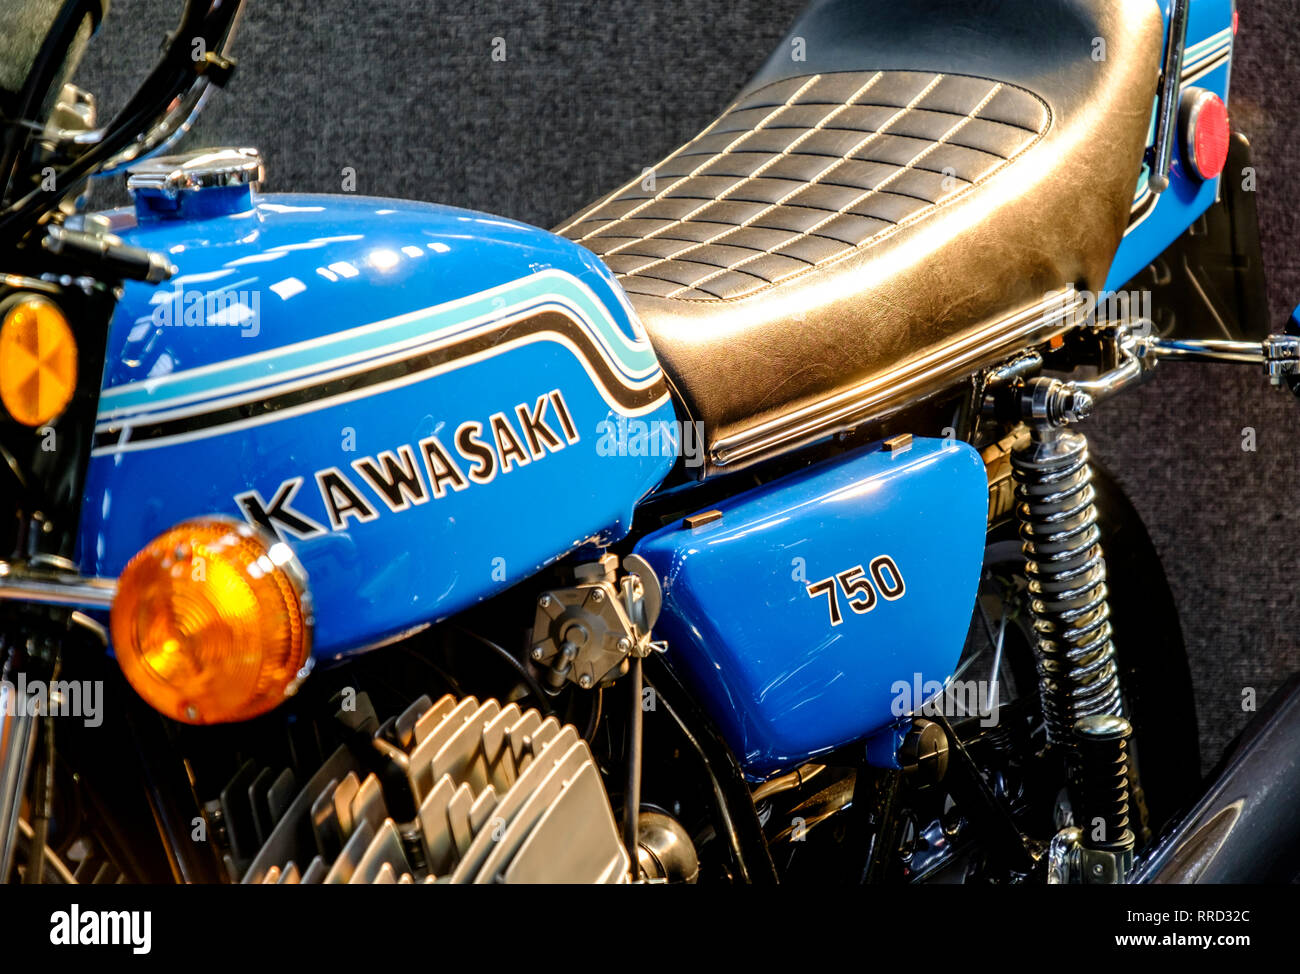 Kawasaki 750 hi-res stock photography and images - Alamy